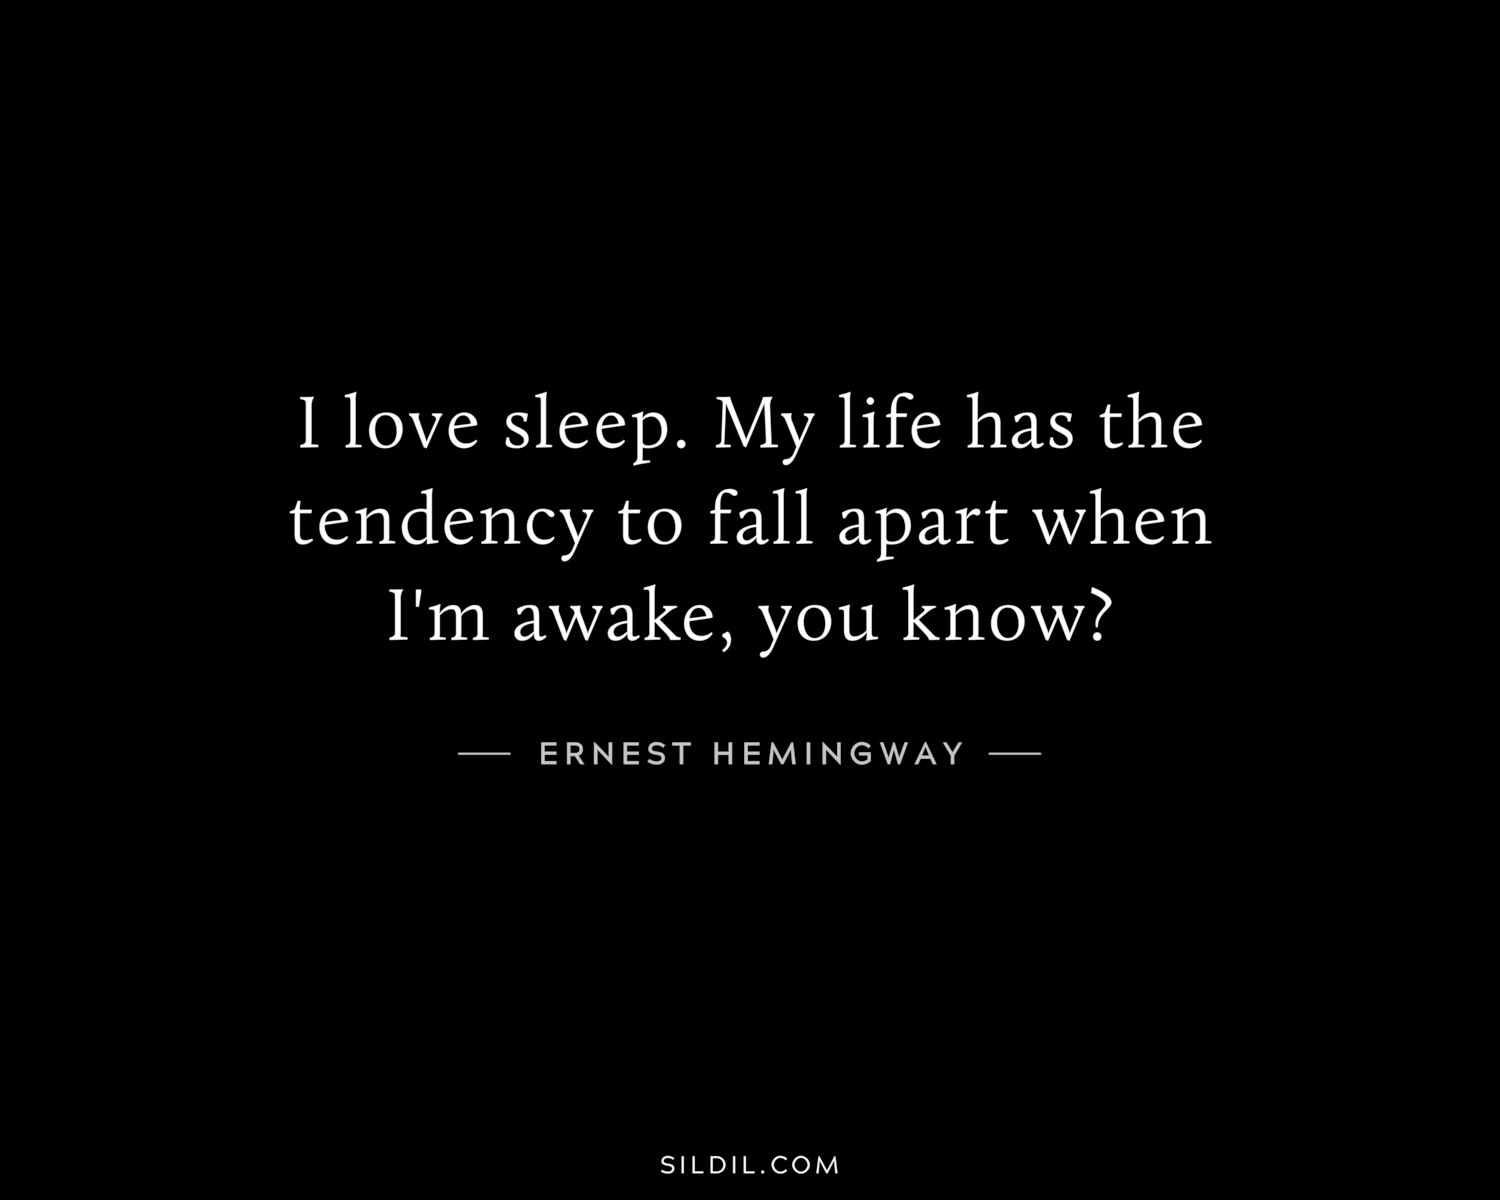 I love sleep. My life has the tendency to fall apart when I'm awake, you know?